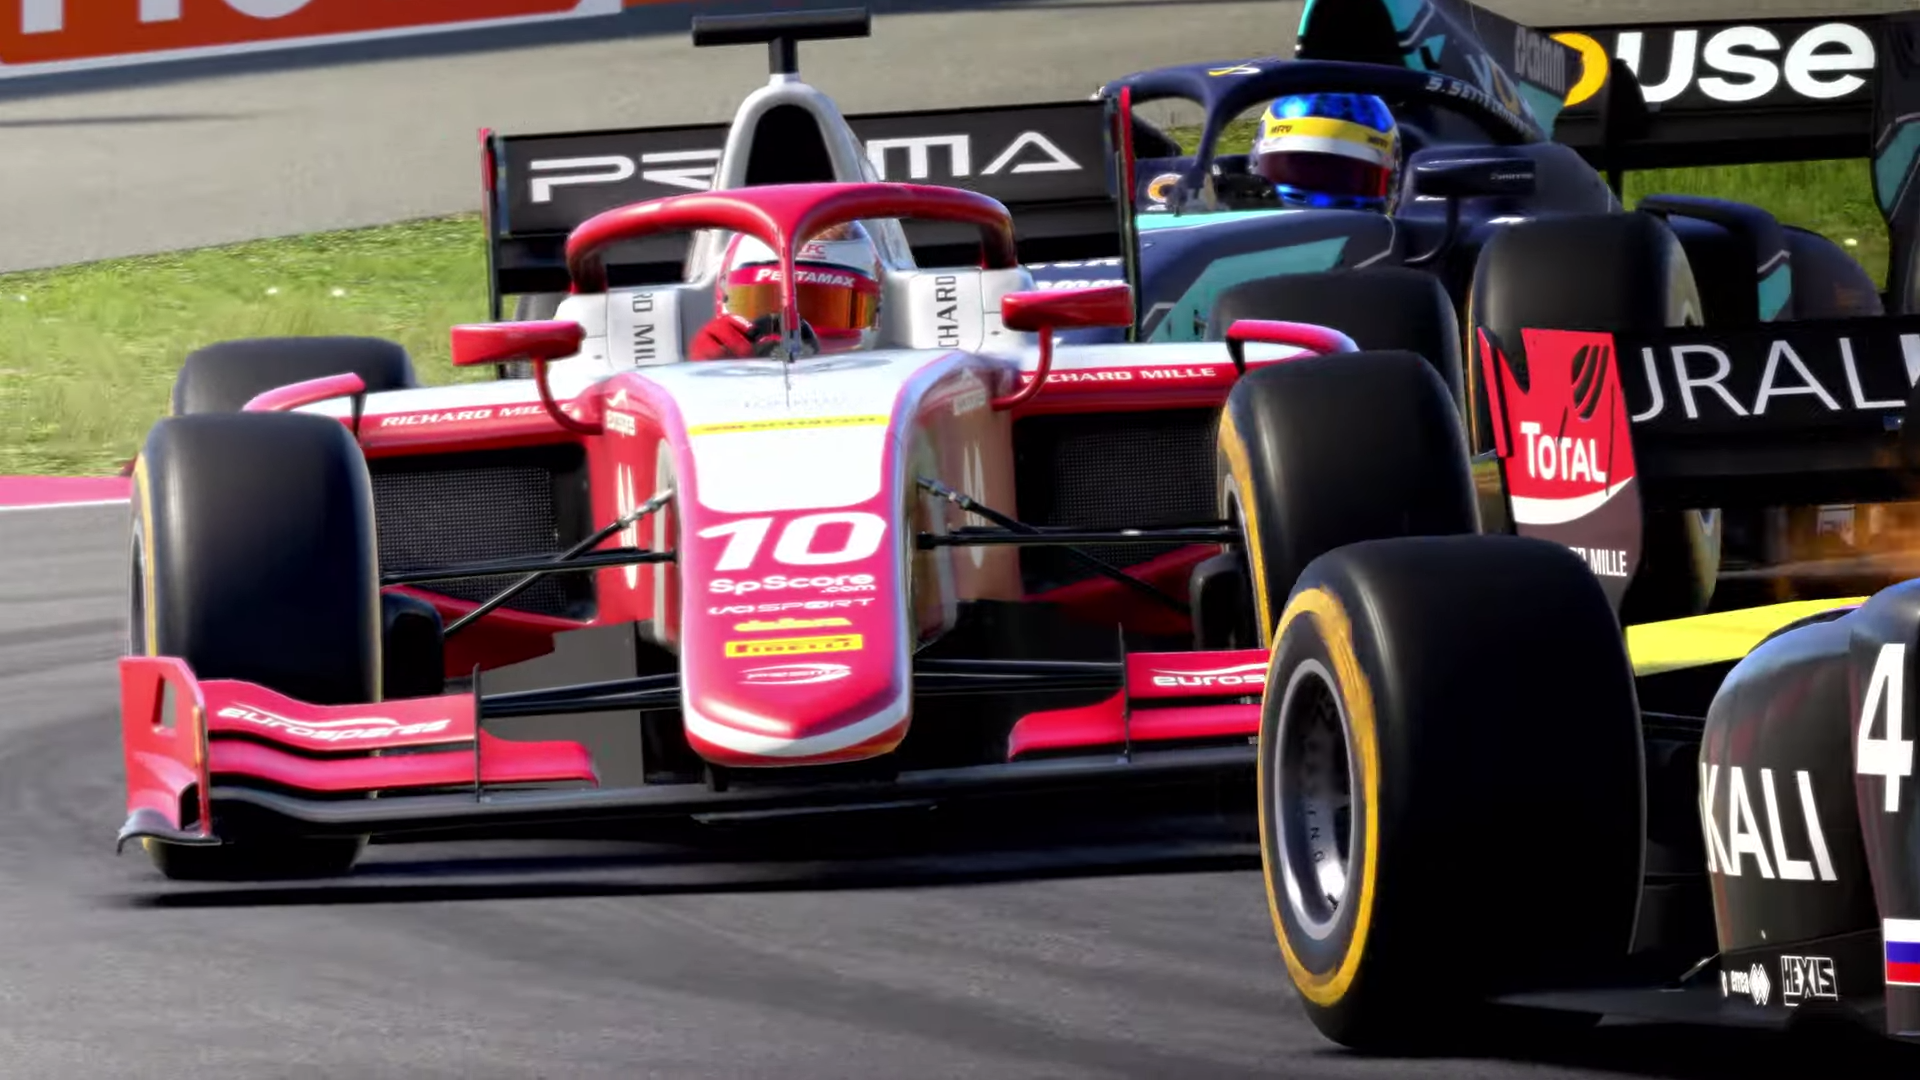 F1 2021 details leaked via Microsoft store